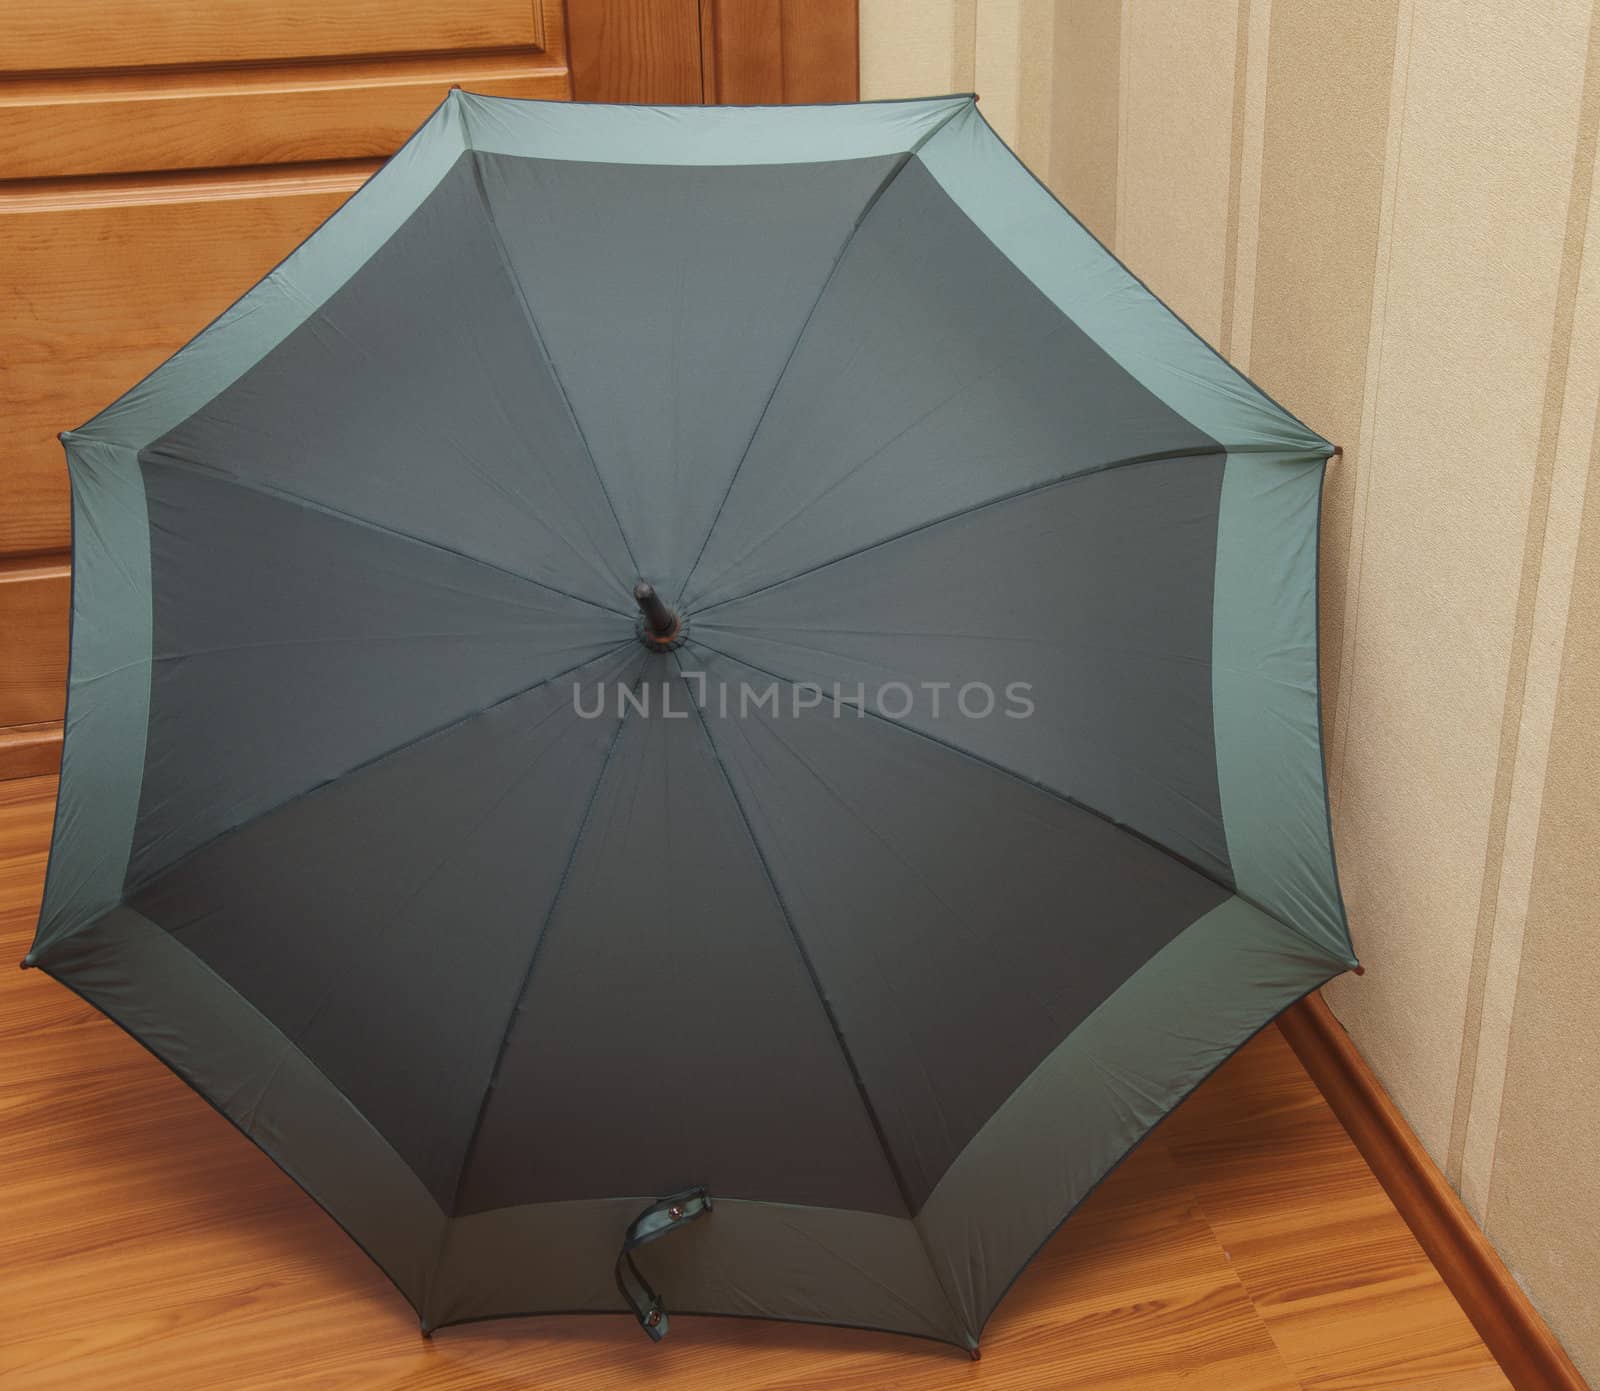 The bright open Umbrella dries near entrance door